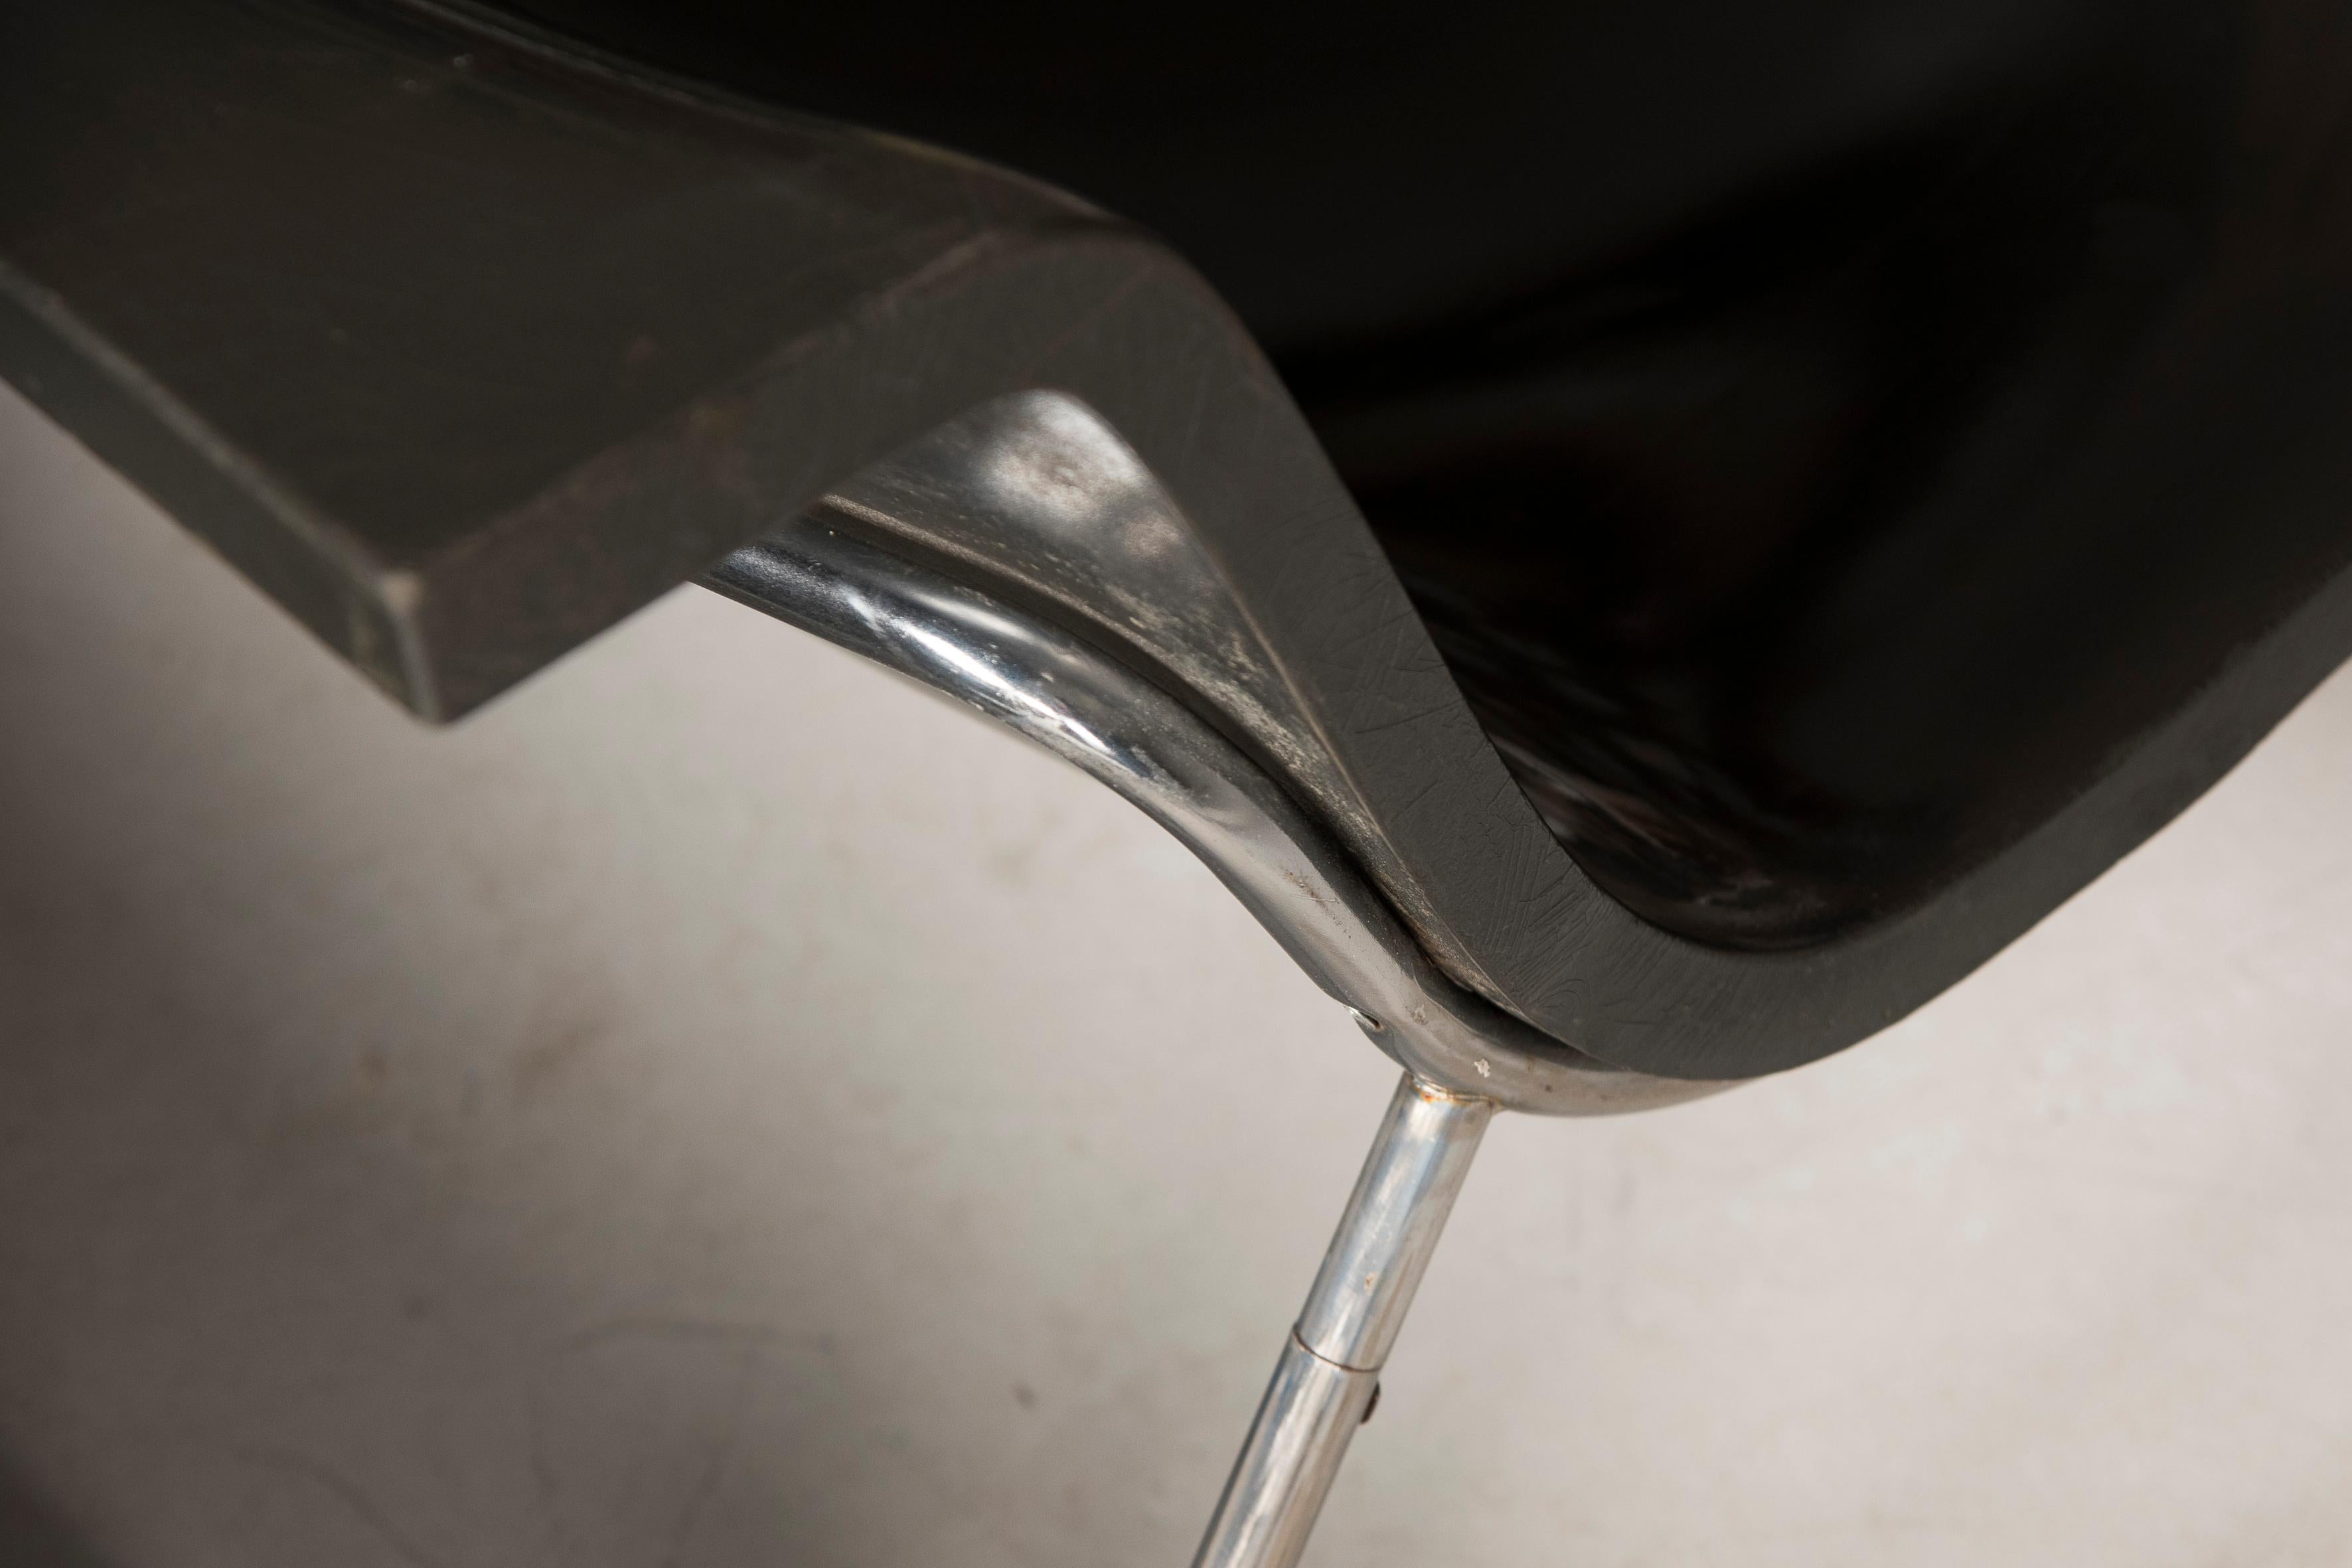 Black Kartell Form Design by Piero Lissoni Steel legs Outdoor Indoor Chairs 4